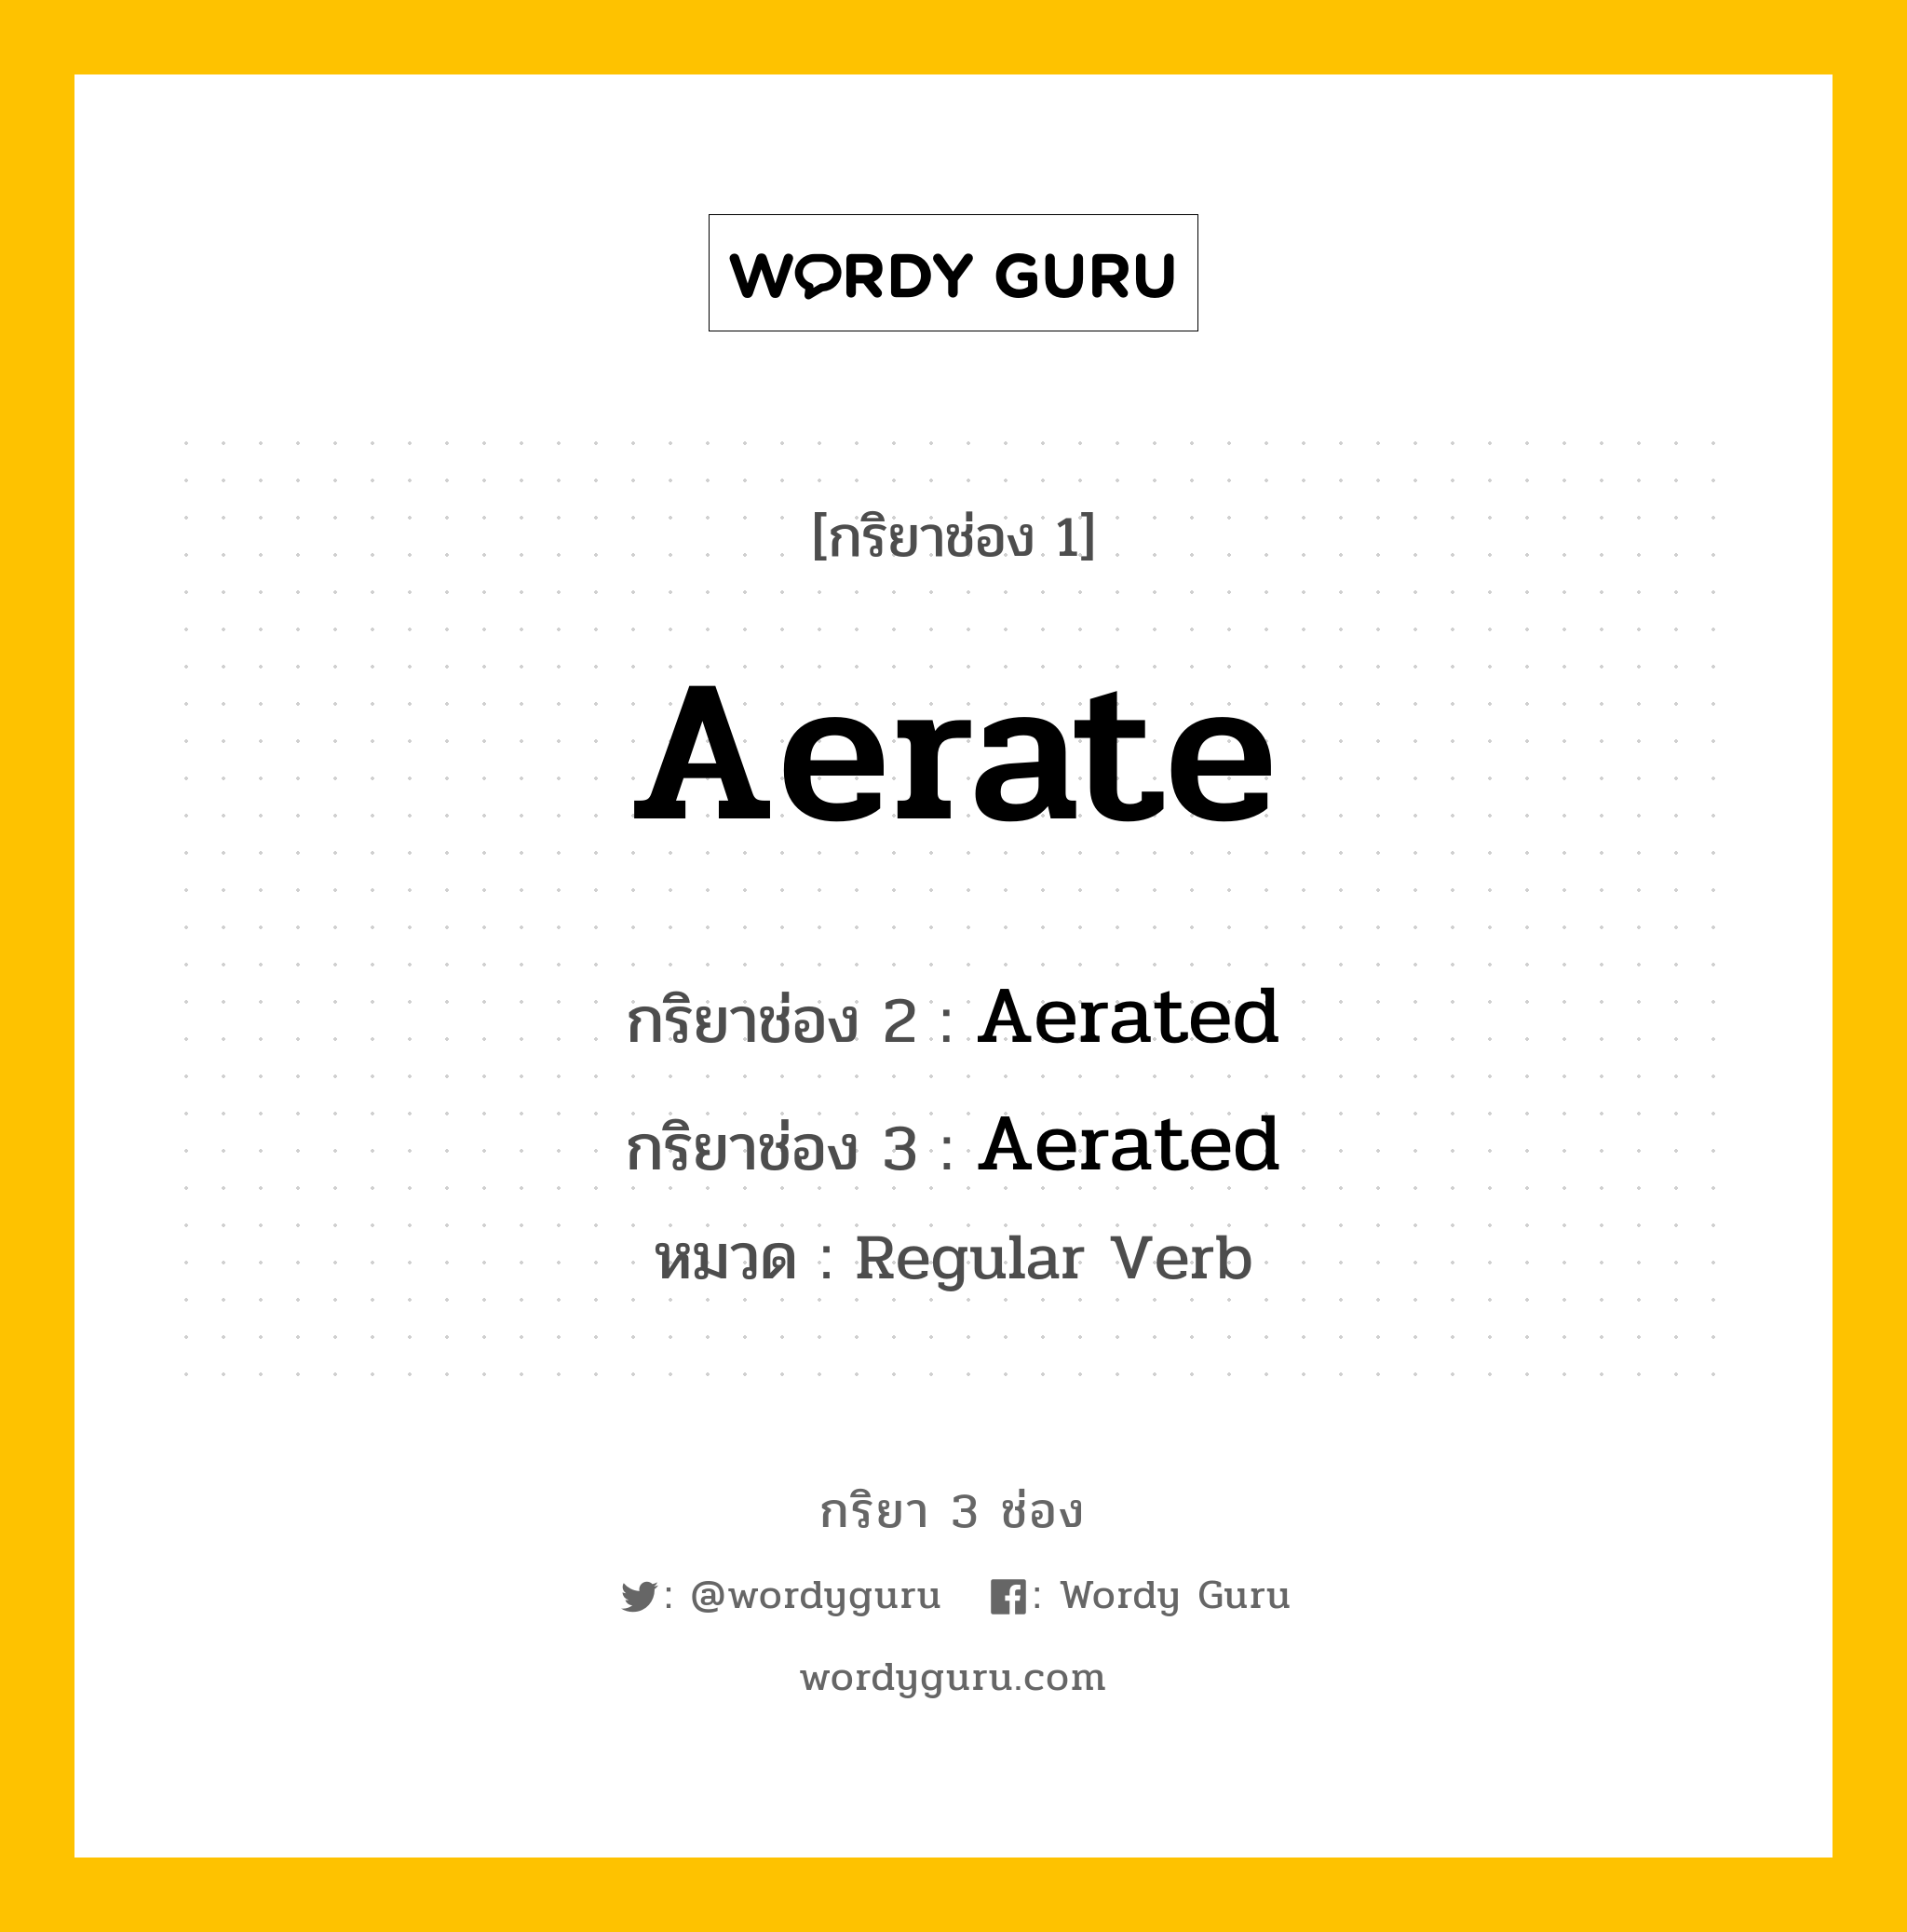 Aerate มีกริยา 3 ช่องอะไรบ้าง? คำศัพท์ในกลุ่มประเภท Regular Verb, กริยาช่อง 1 Aerate กริยาช่อง 2 Aerated กริยาช่อง 3 Aerated หมวด Regular Verb หมวด Regular Verb